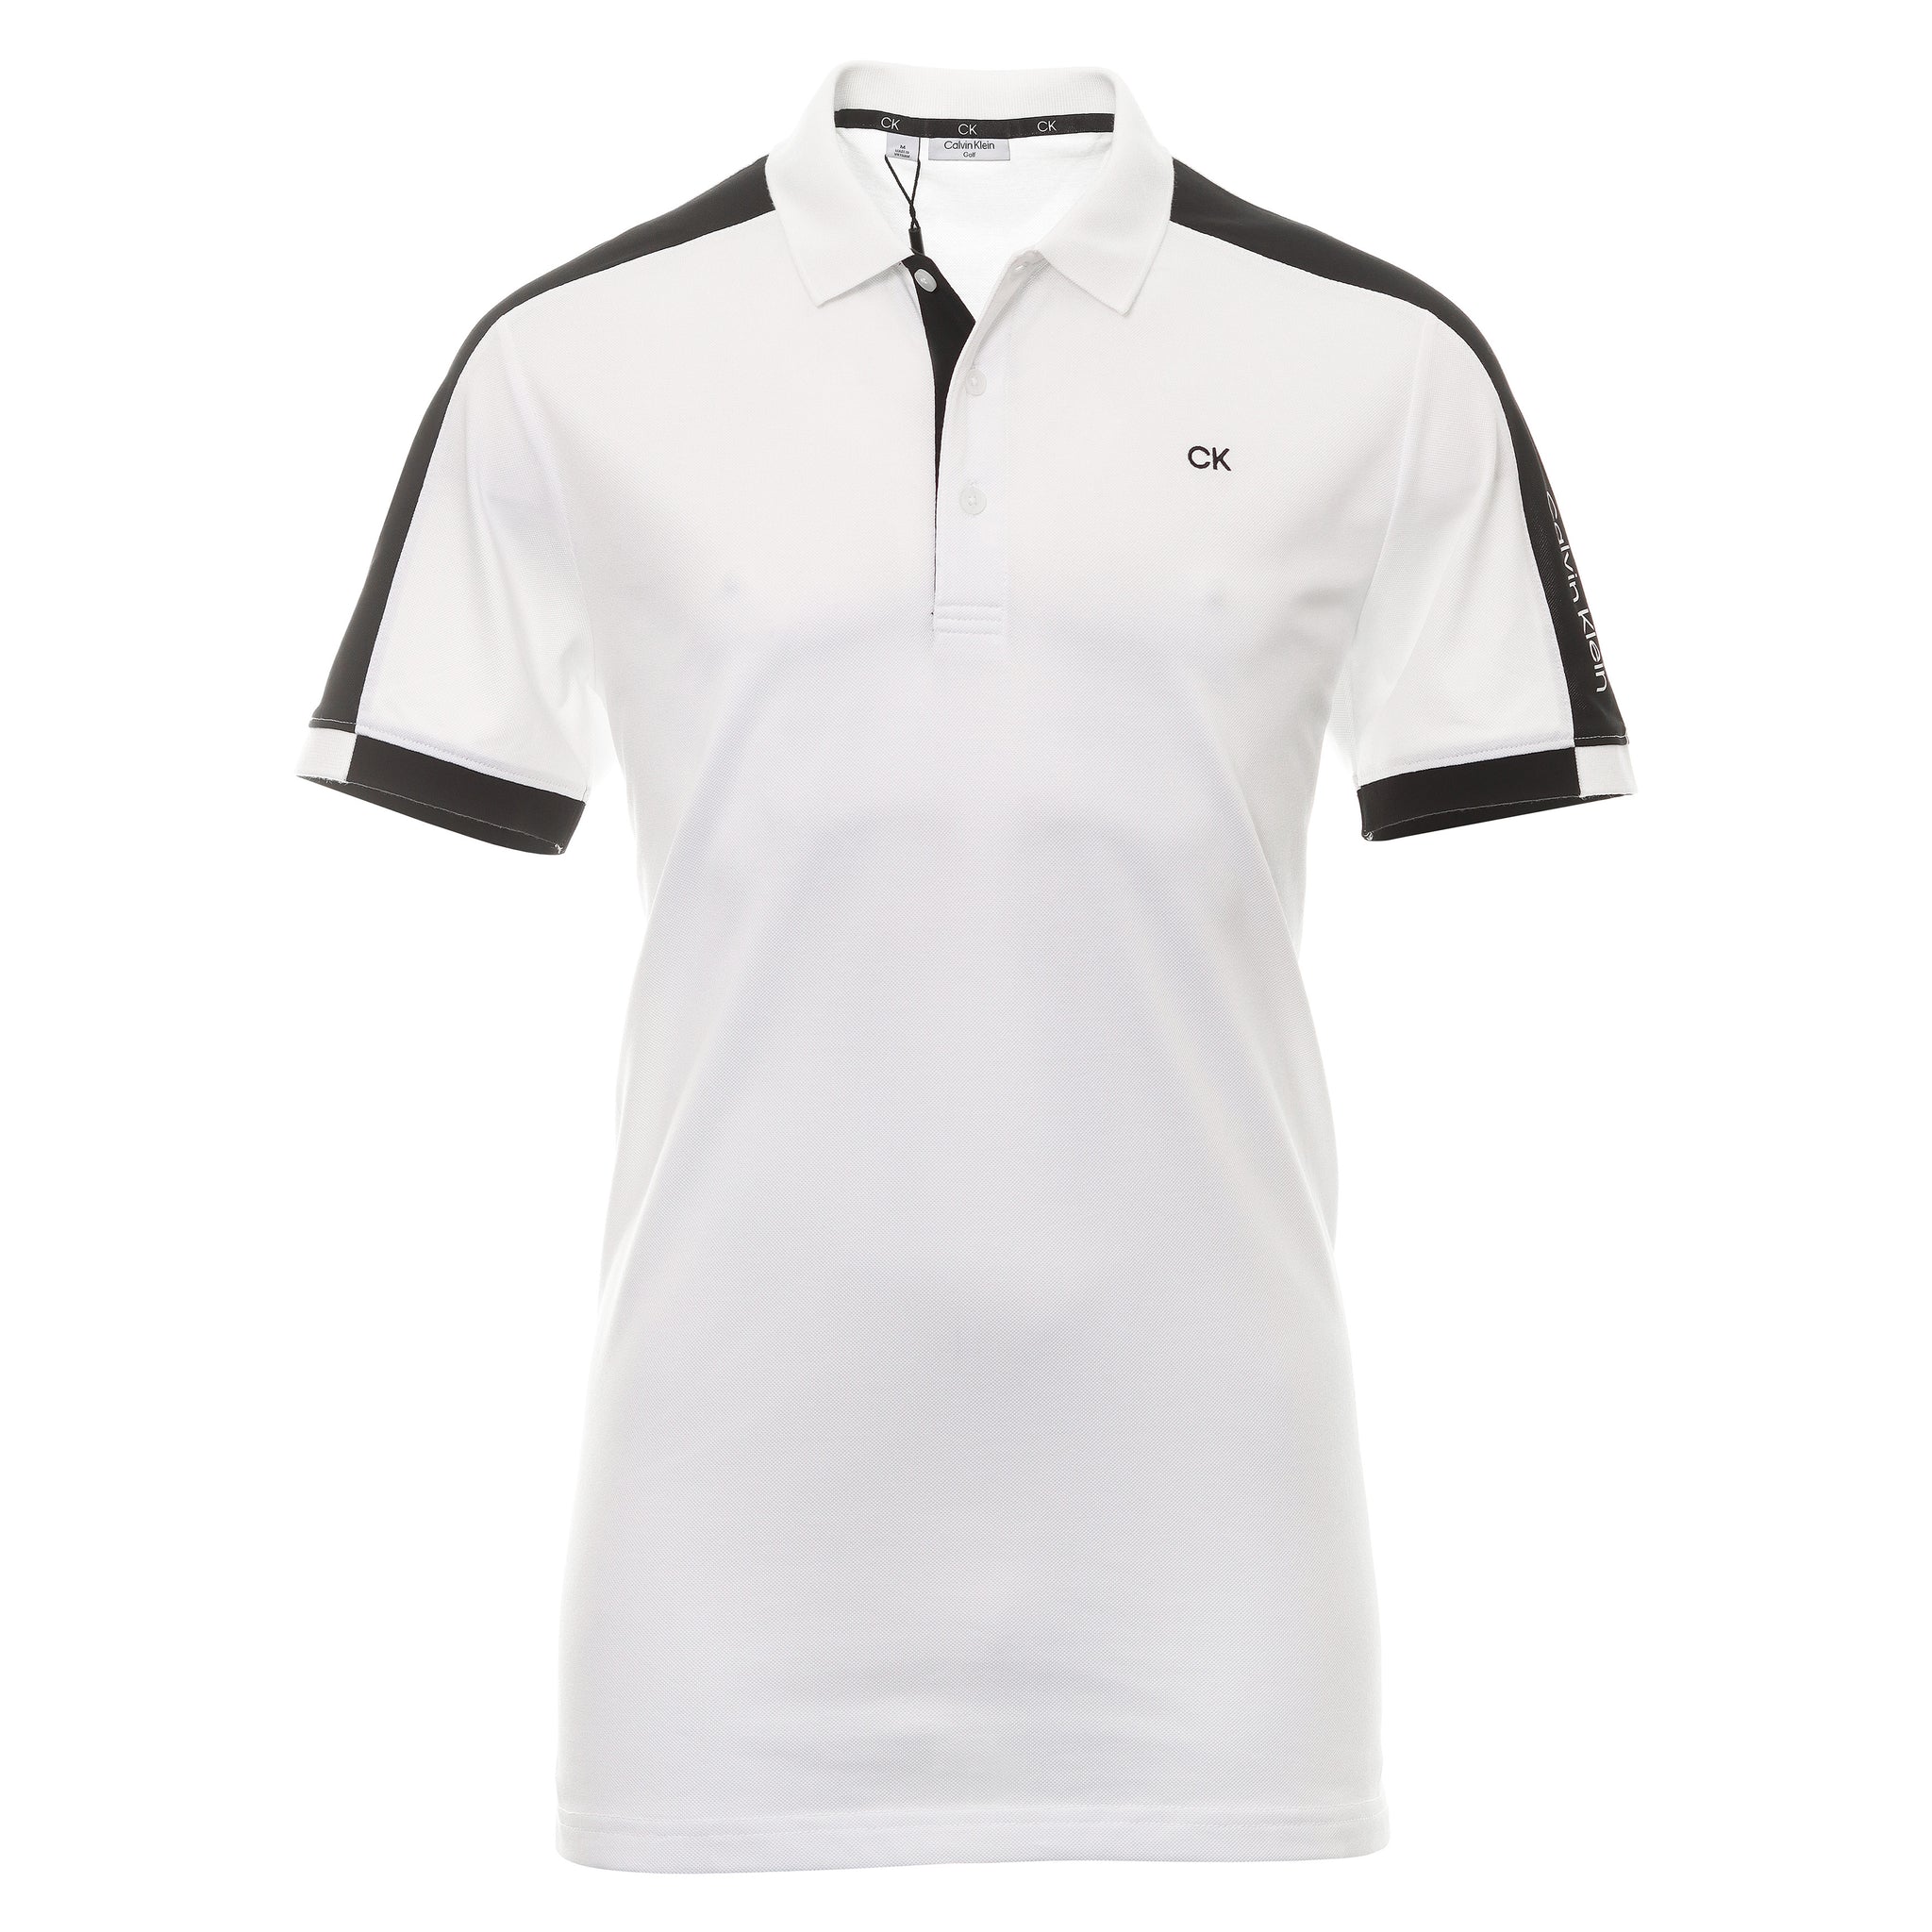 Calvin Klein Golf Miles Shirt CKMS23754 White Black | Function18 ...